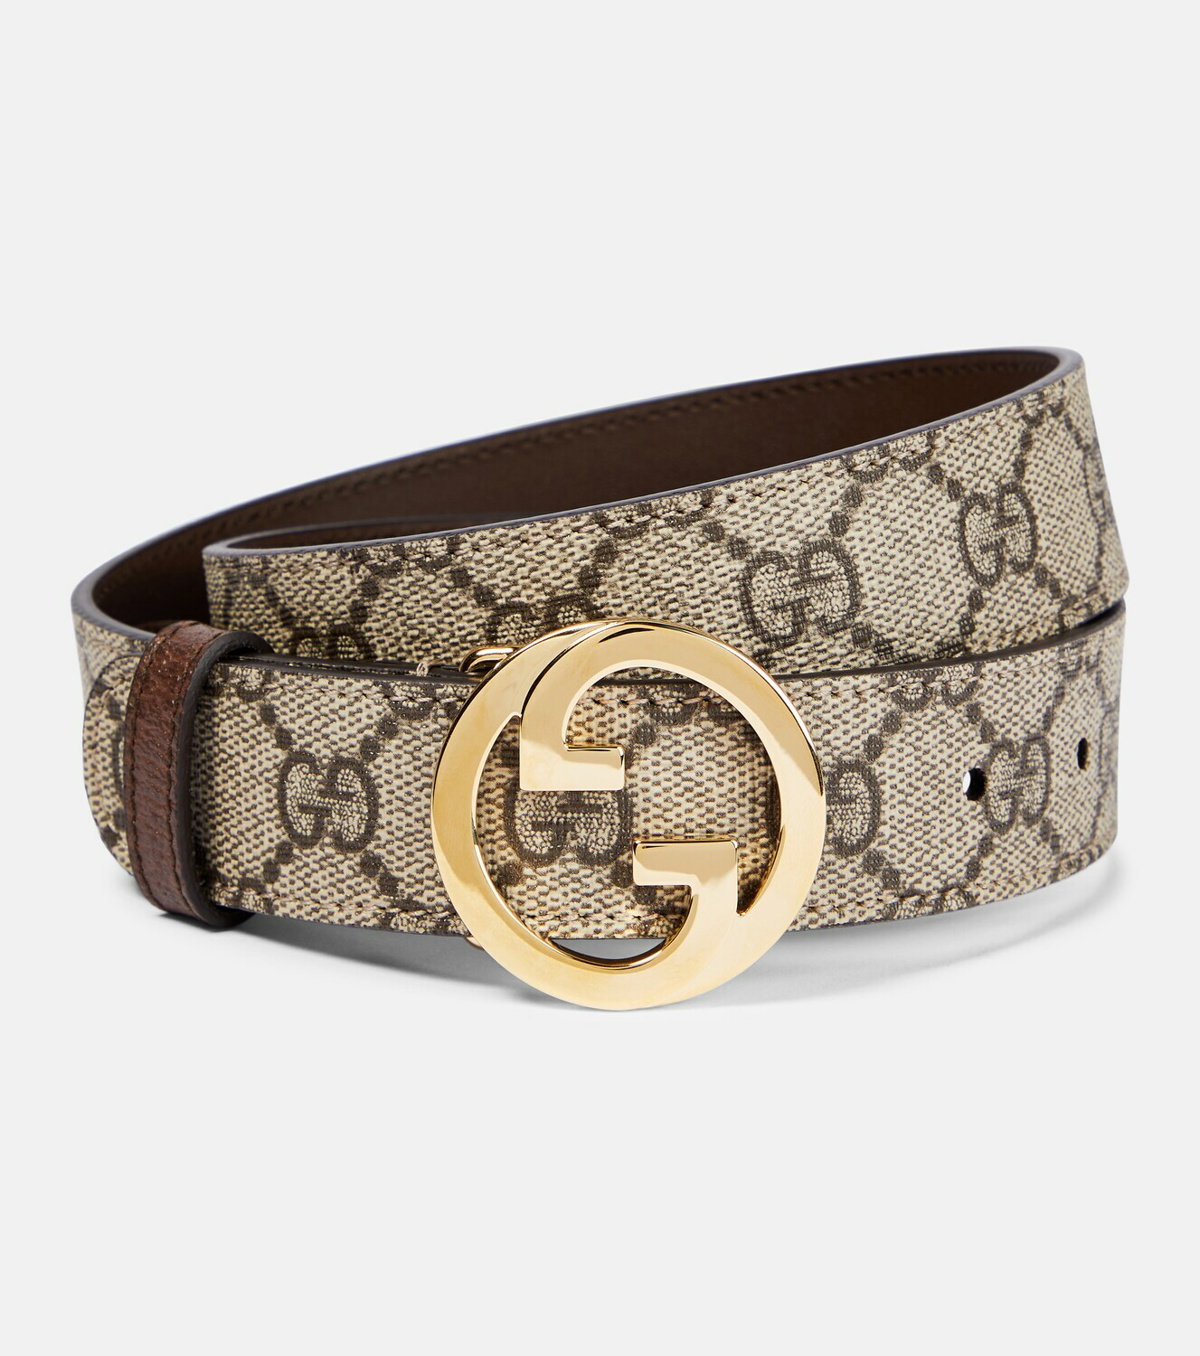 Gucci Blondie belt in beige and ebony Supreme